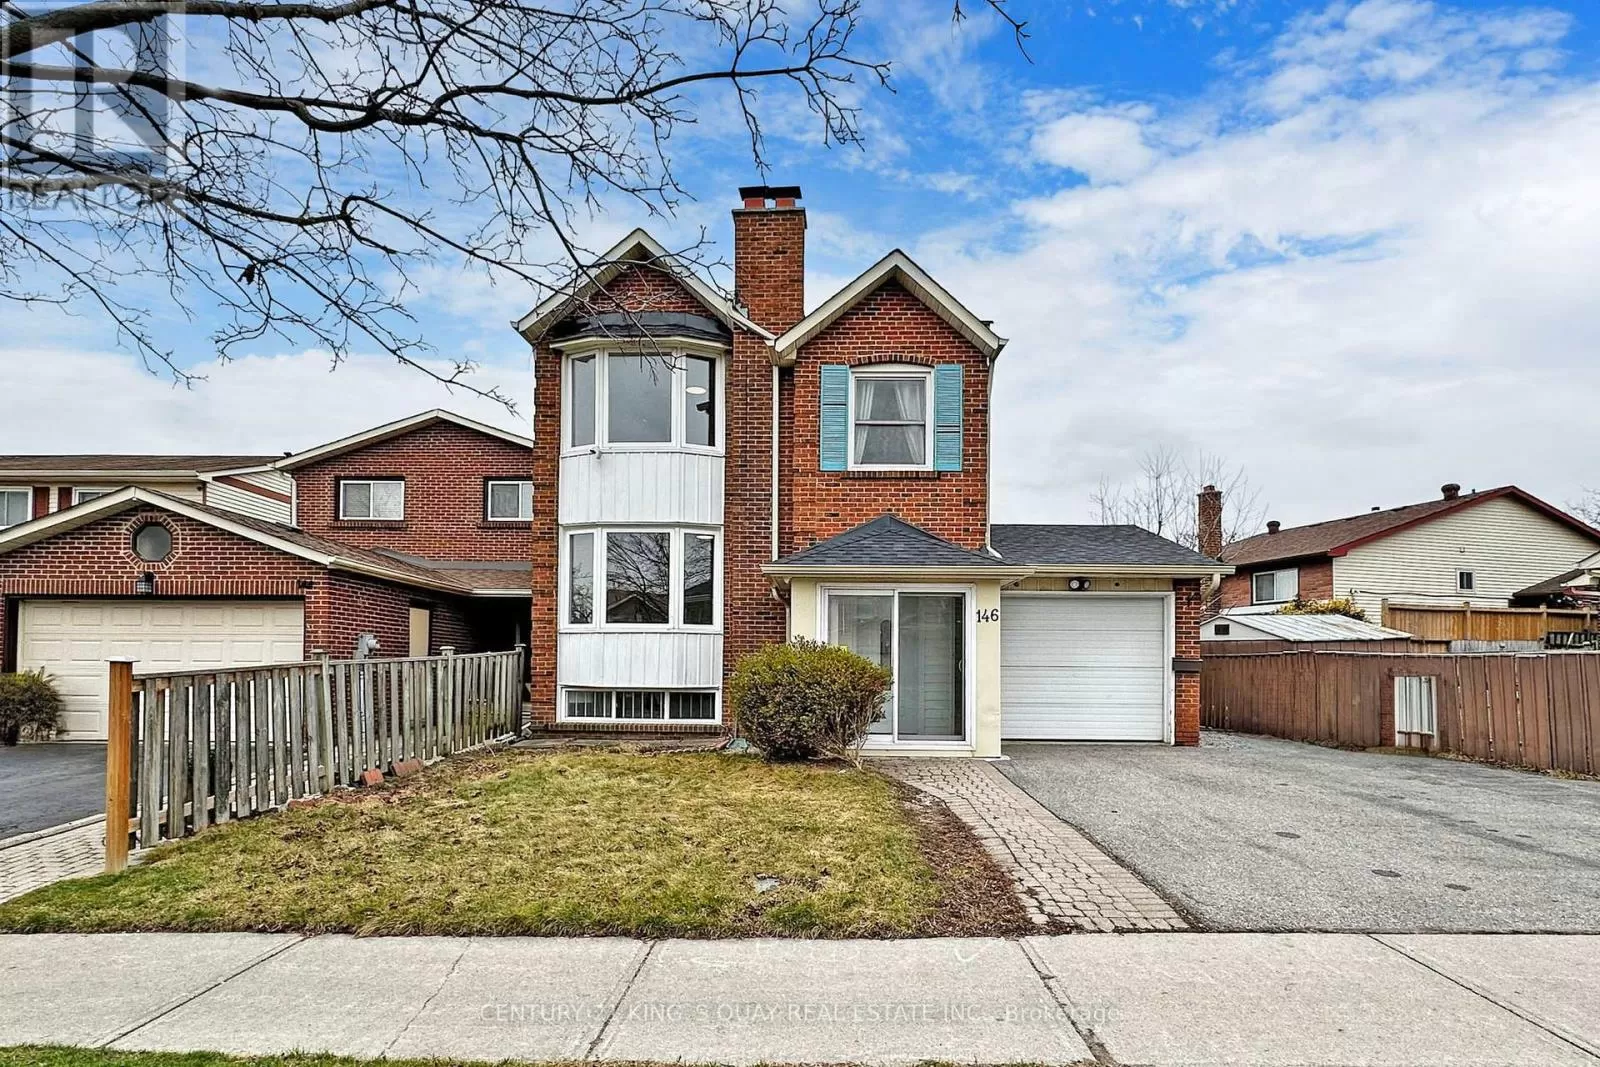 House for rent: 146 Grenbeck Drive, Toronto, Ontario M1V 2H6